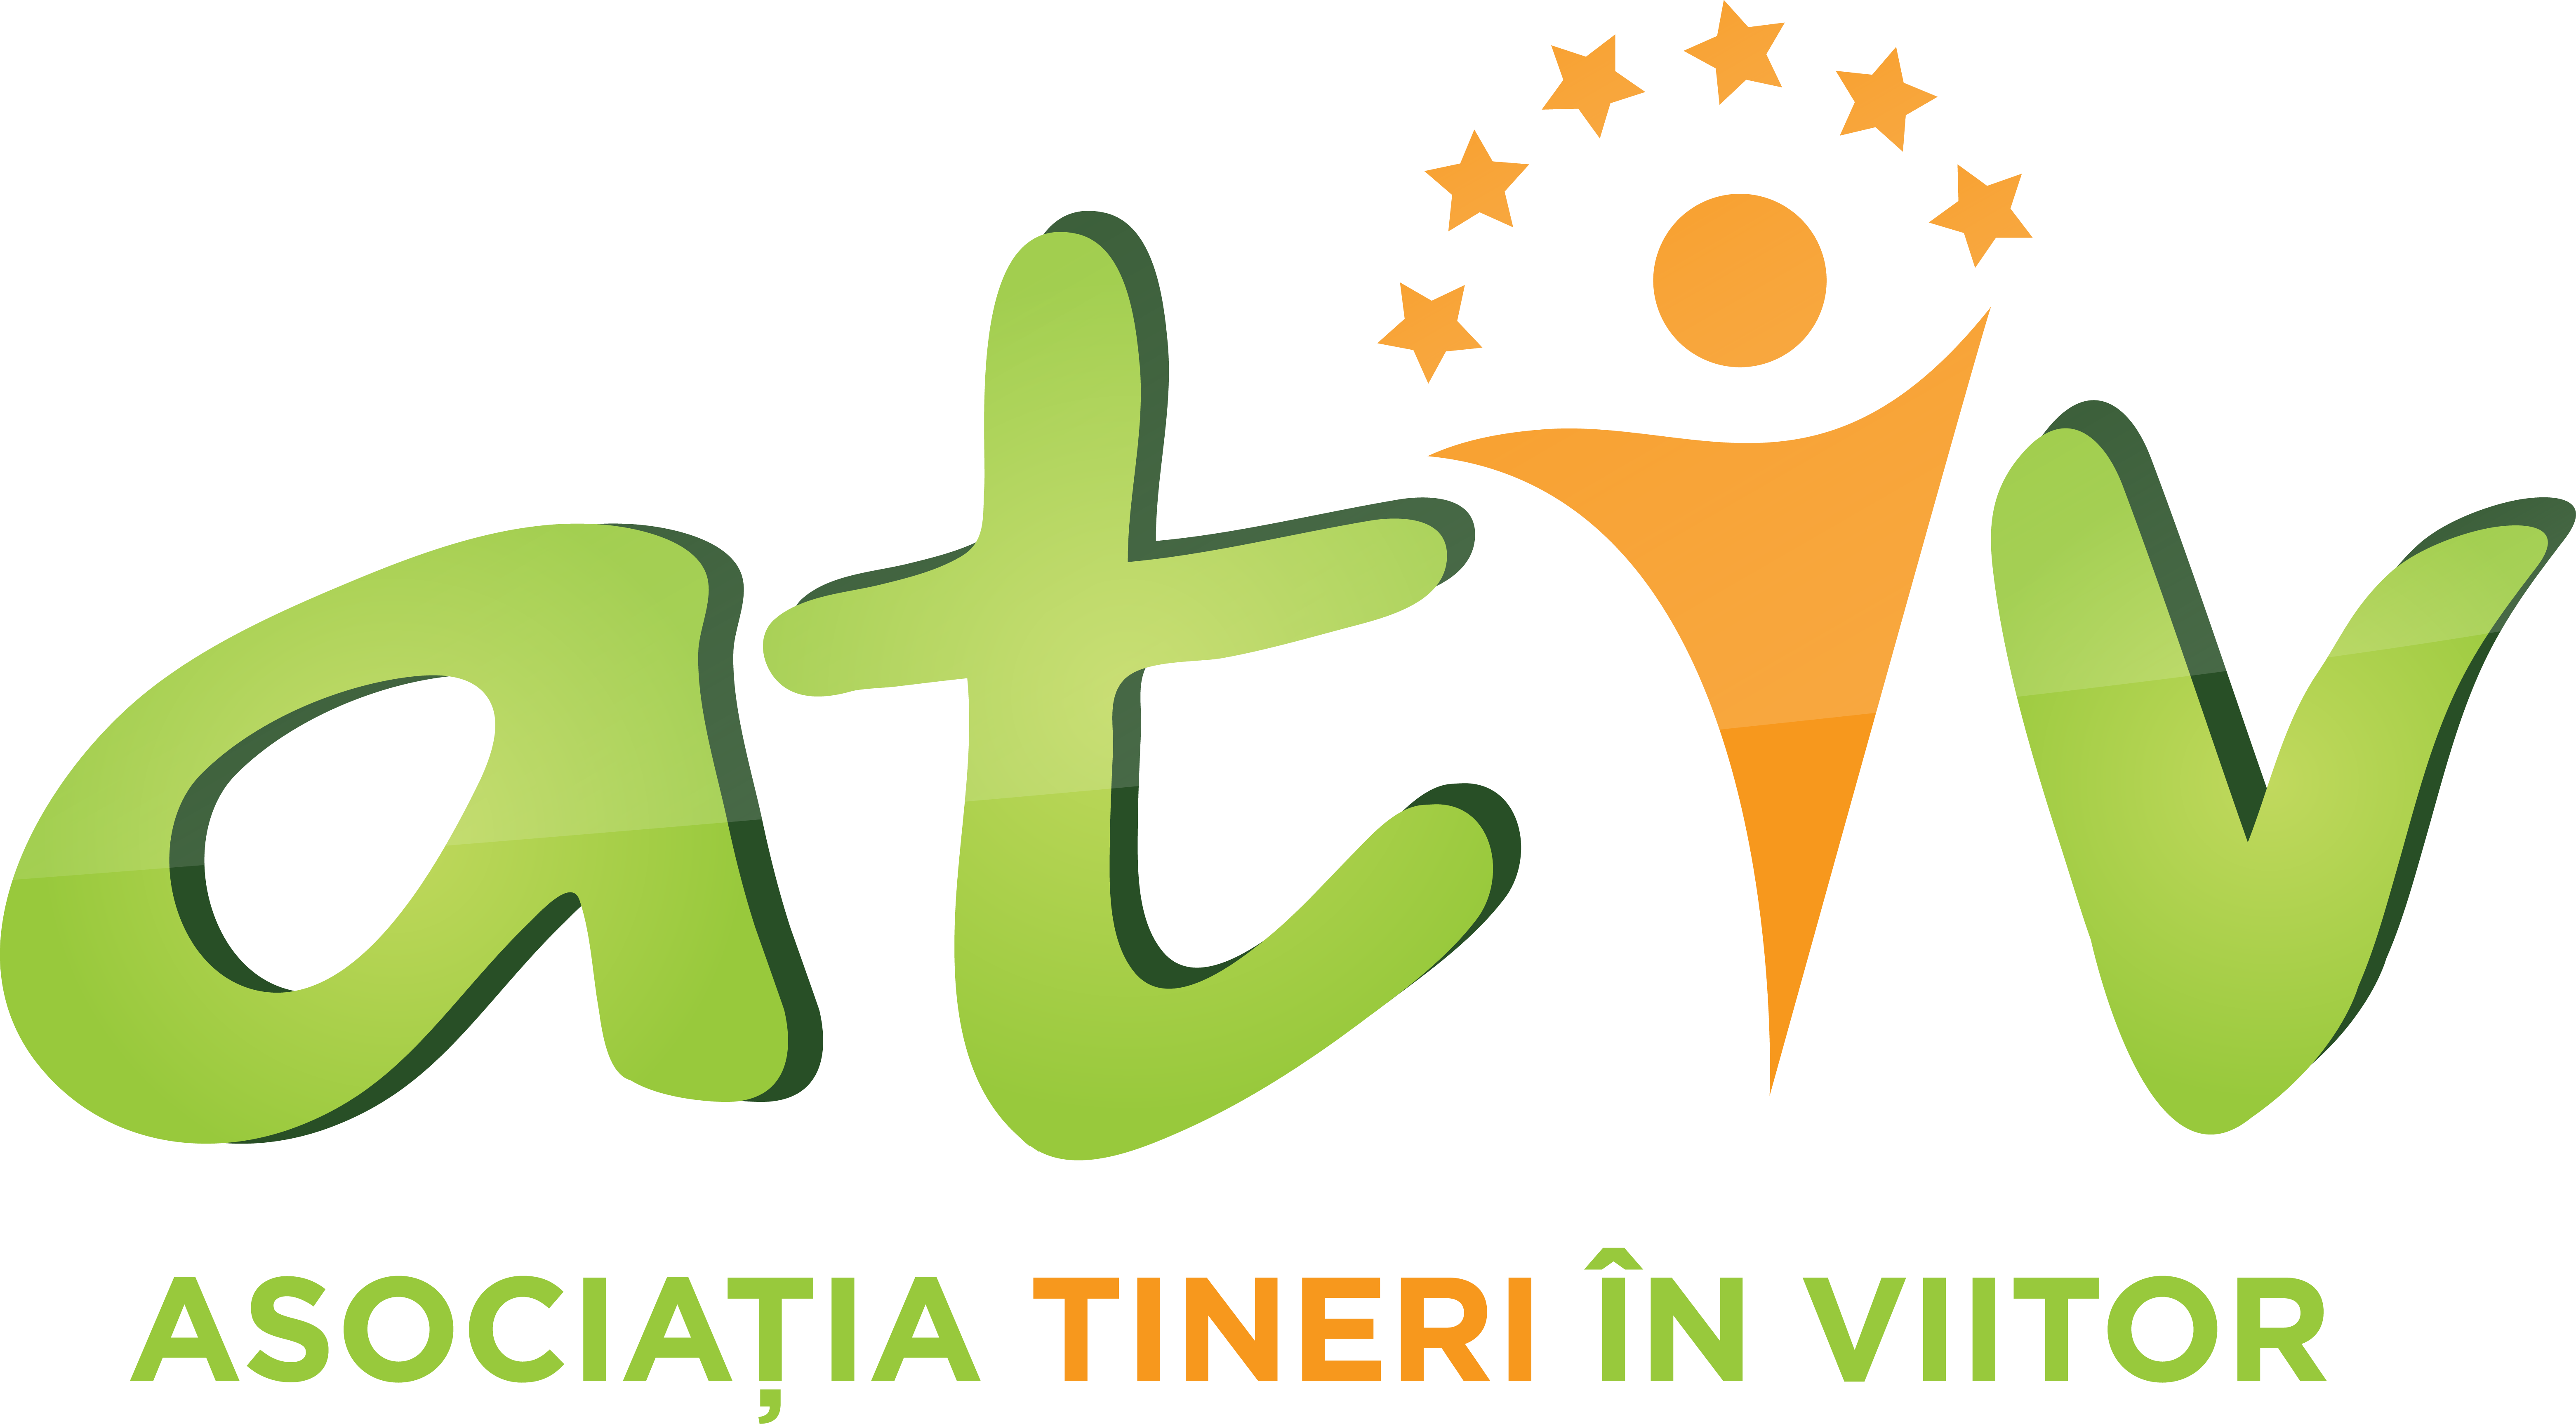 ASOCIATIA ATIV - TINERI IN VIITOR logo